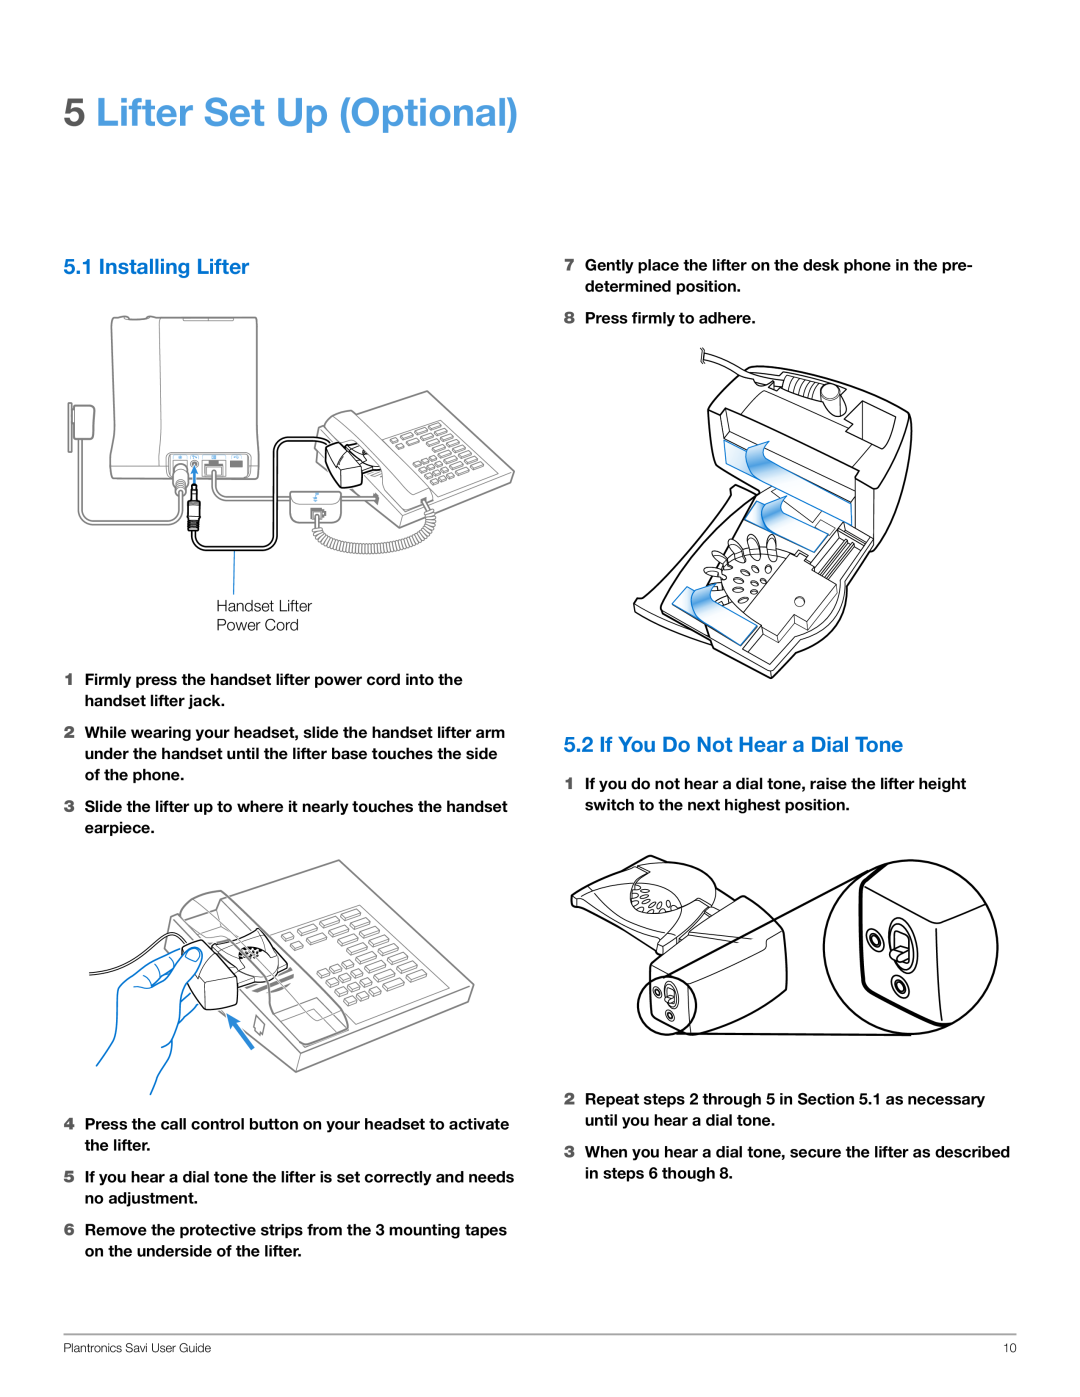 Plantronics WO101 manual Lifter Set Up Optional, Installing Lifter, If You Do Not Hear a Dial Tone 